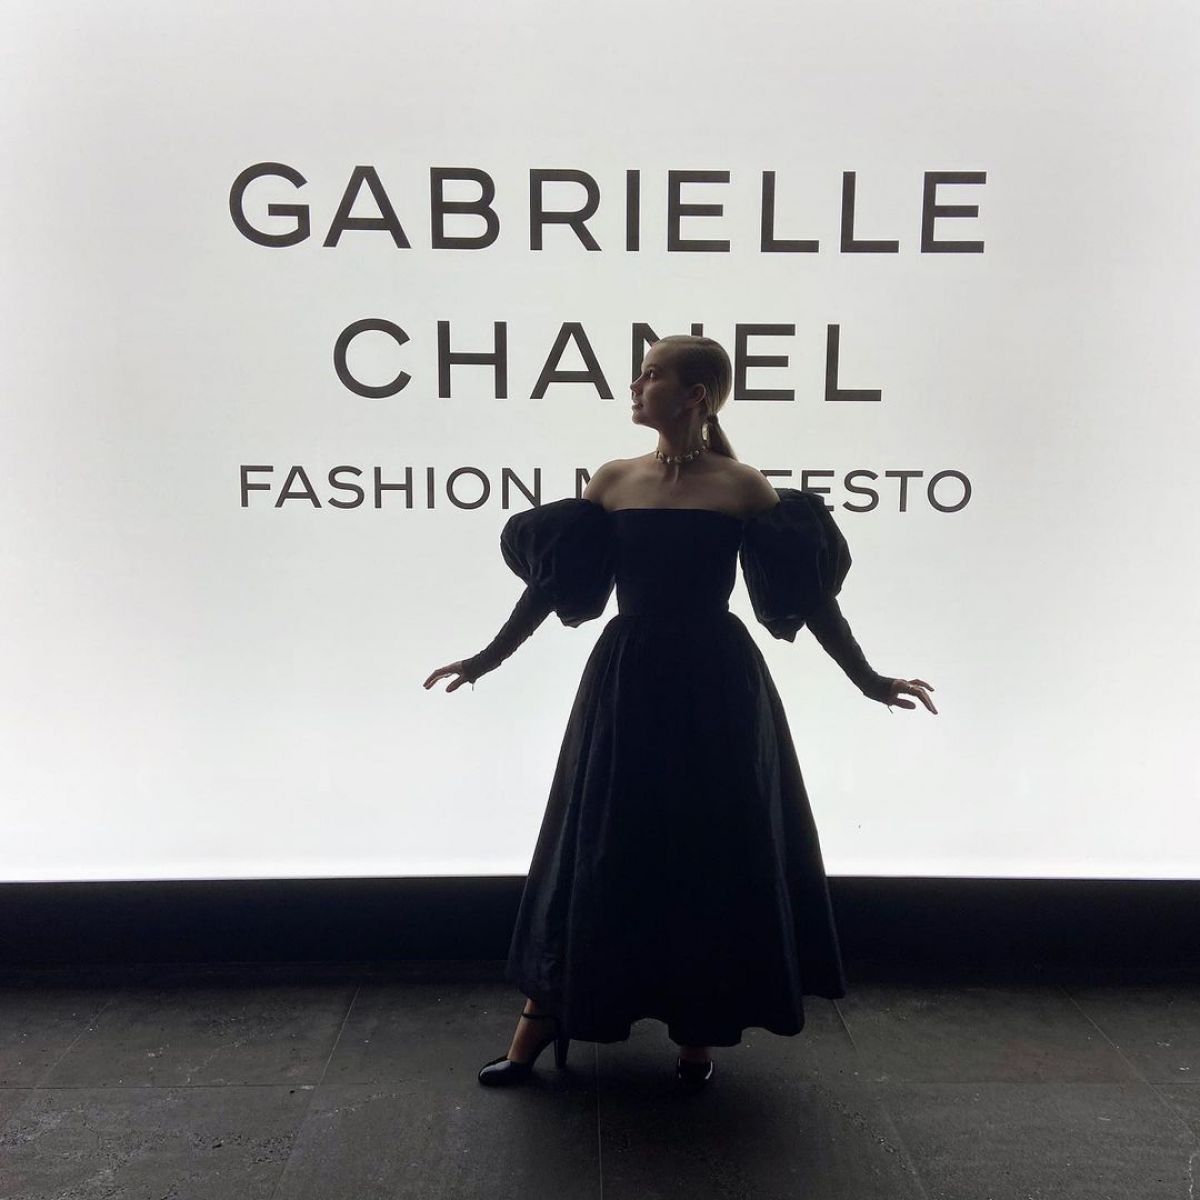 Angourie Rice Gabrielle Chanel Fashion Manfiesto Melbourne